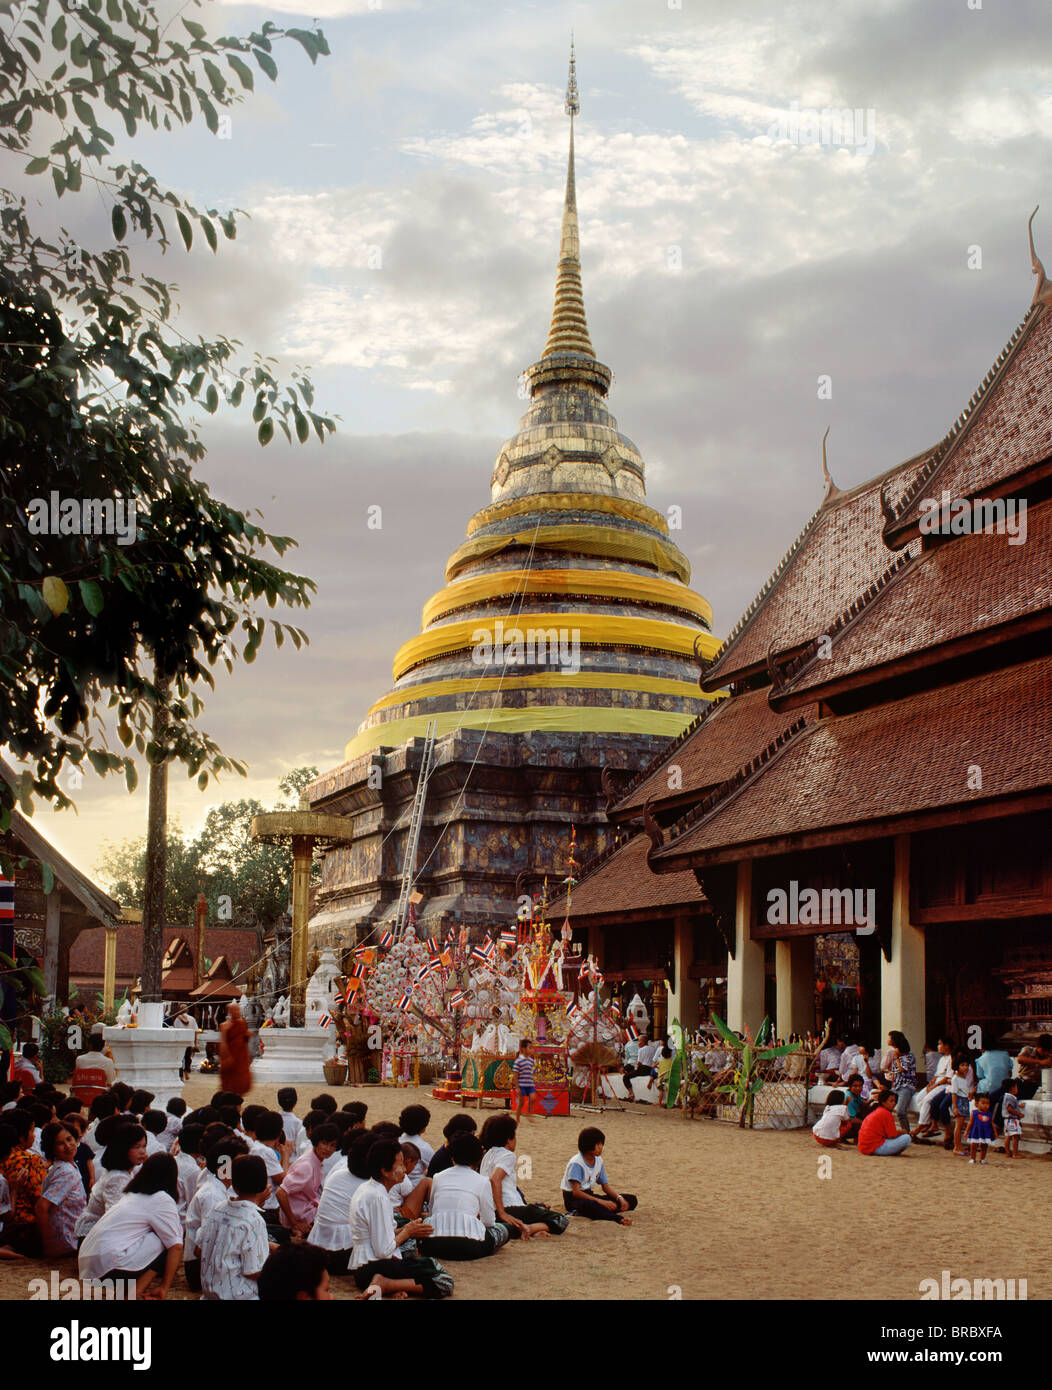 Open-sided Wihaan durante el festival de Wat Phra That Luang, Lampang, Tailandia Foto de stock